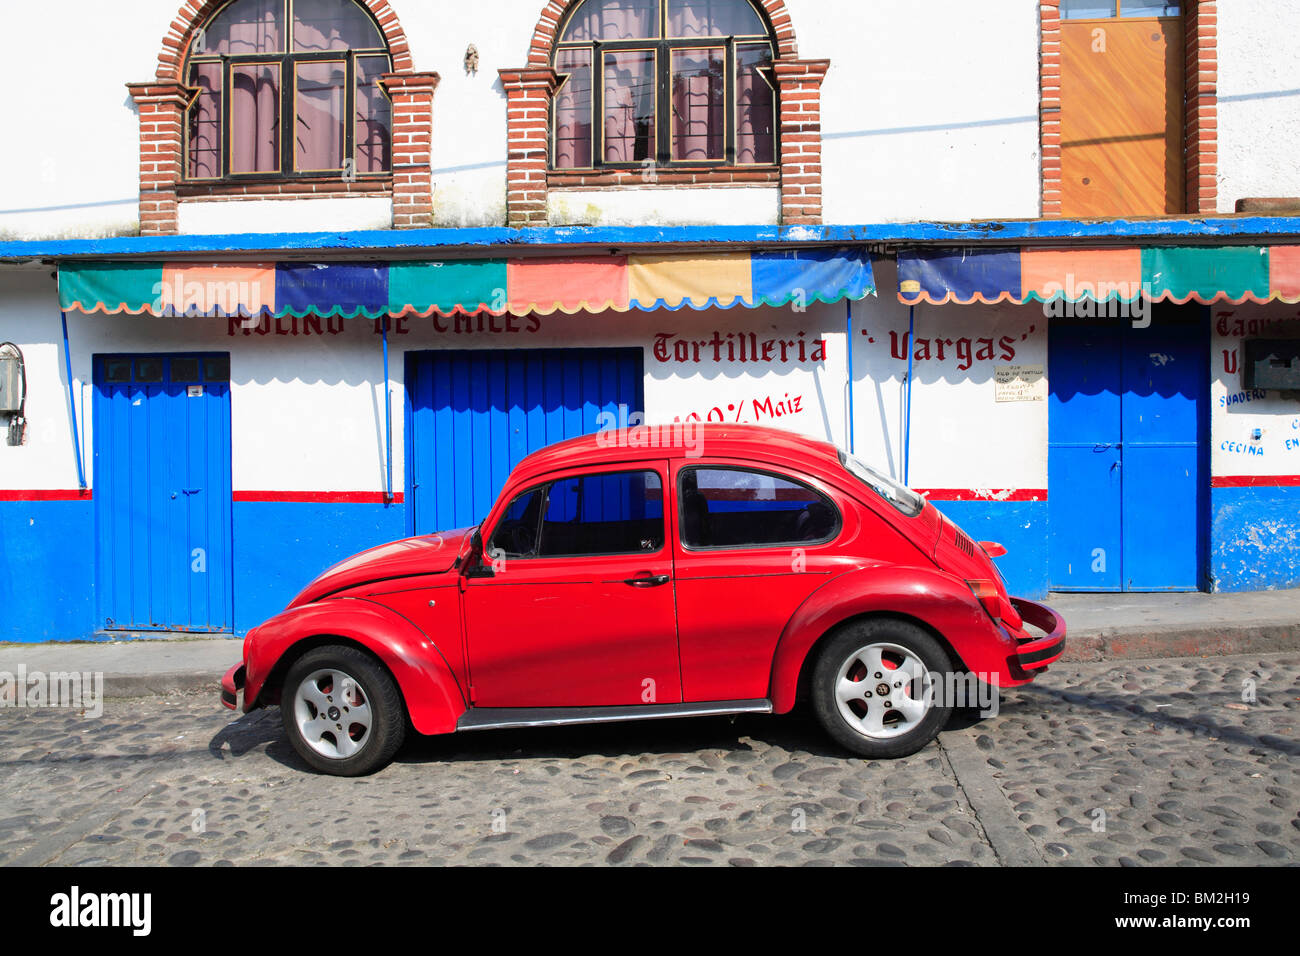 Red Volkswagon Beetle parked on cobblestone street, Tepoztlan, Morelos, Mexico Stock Photo